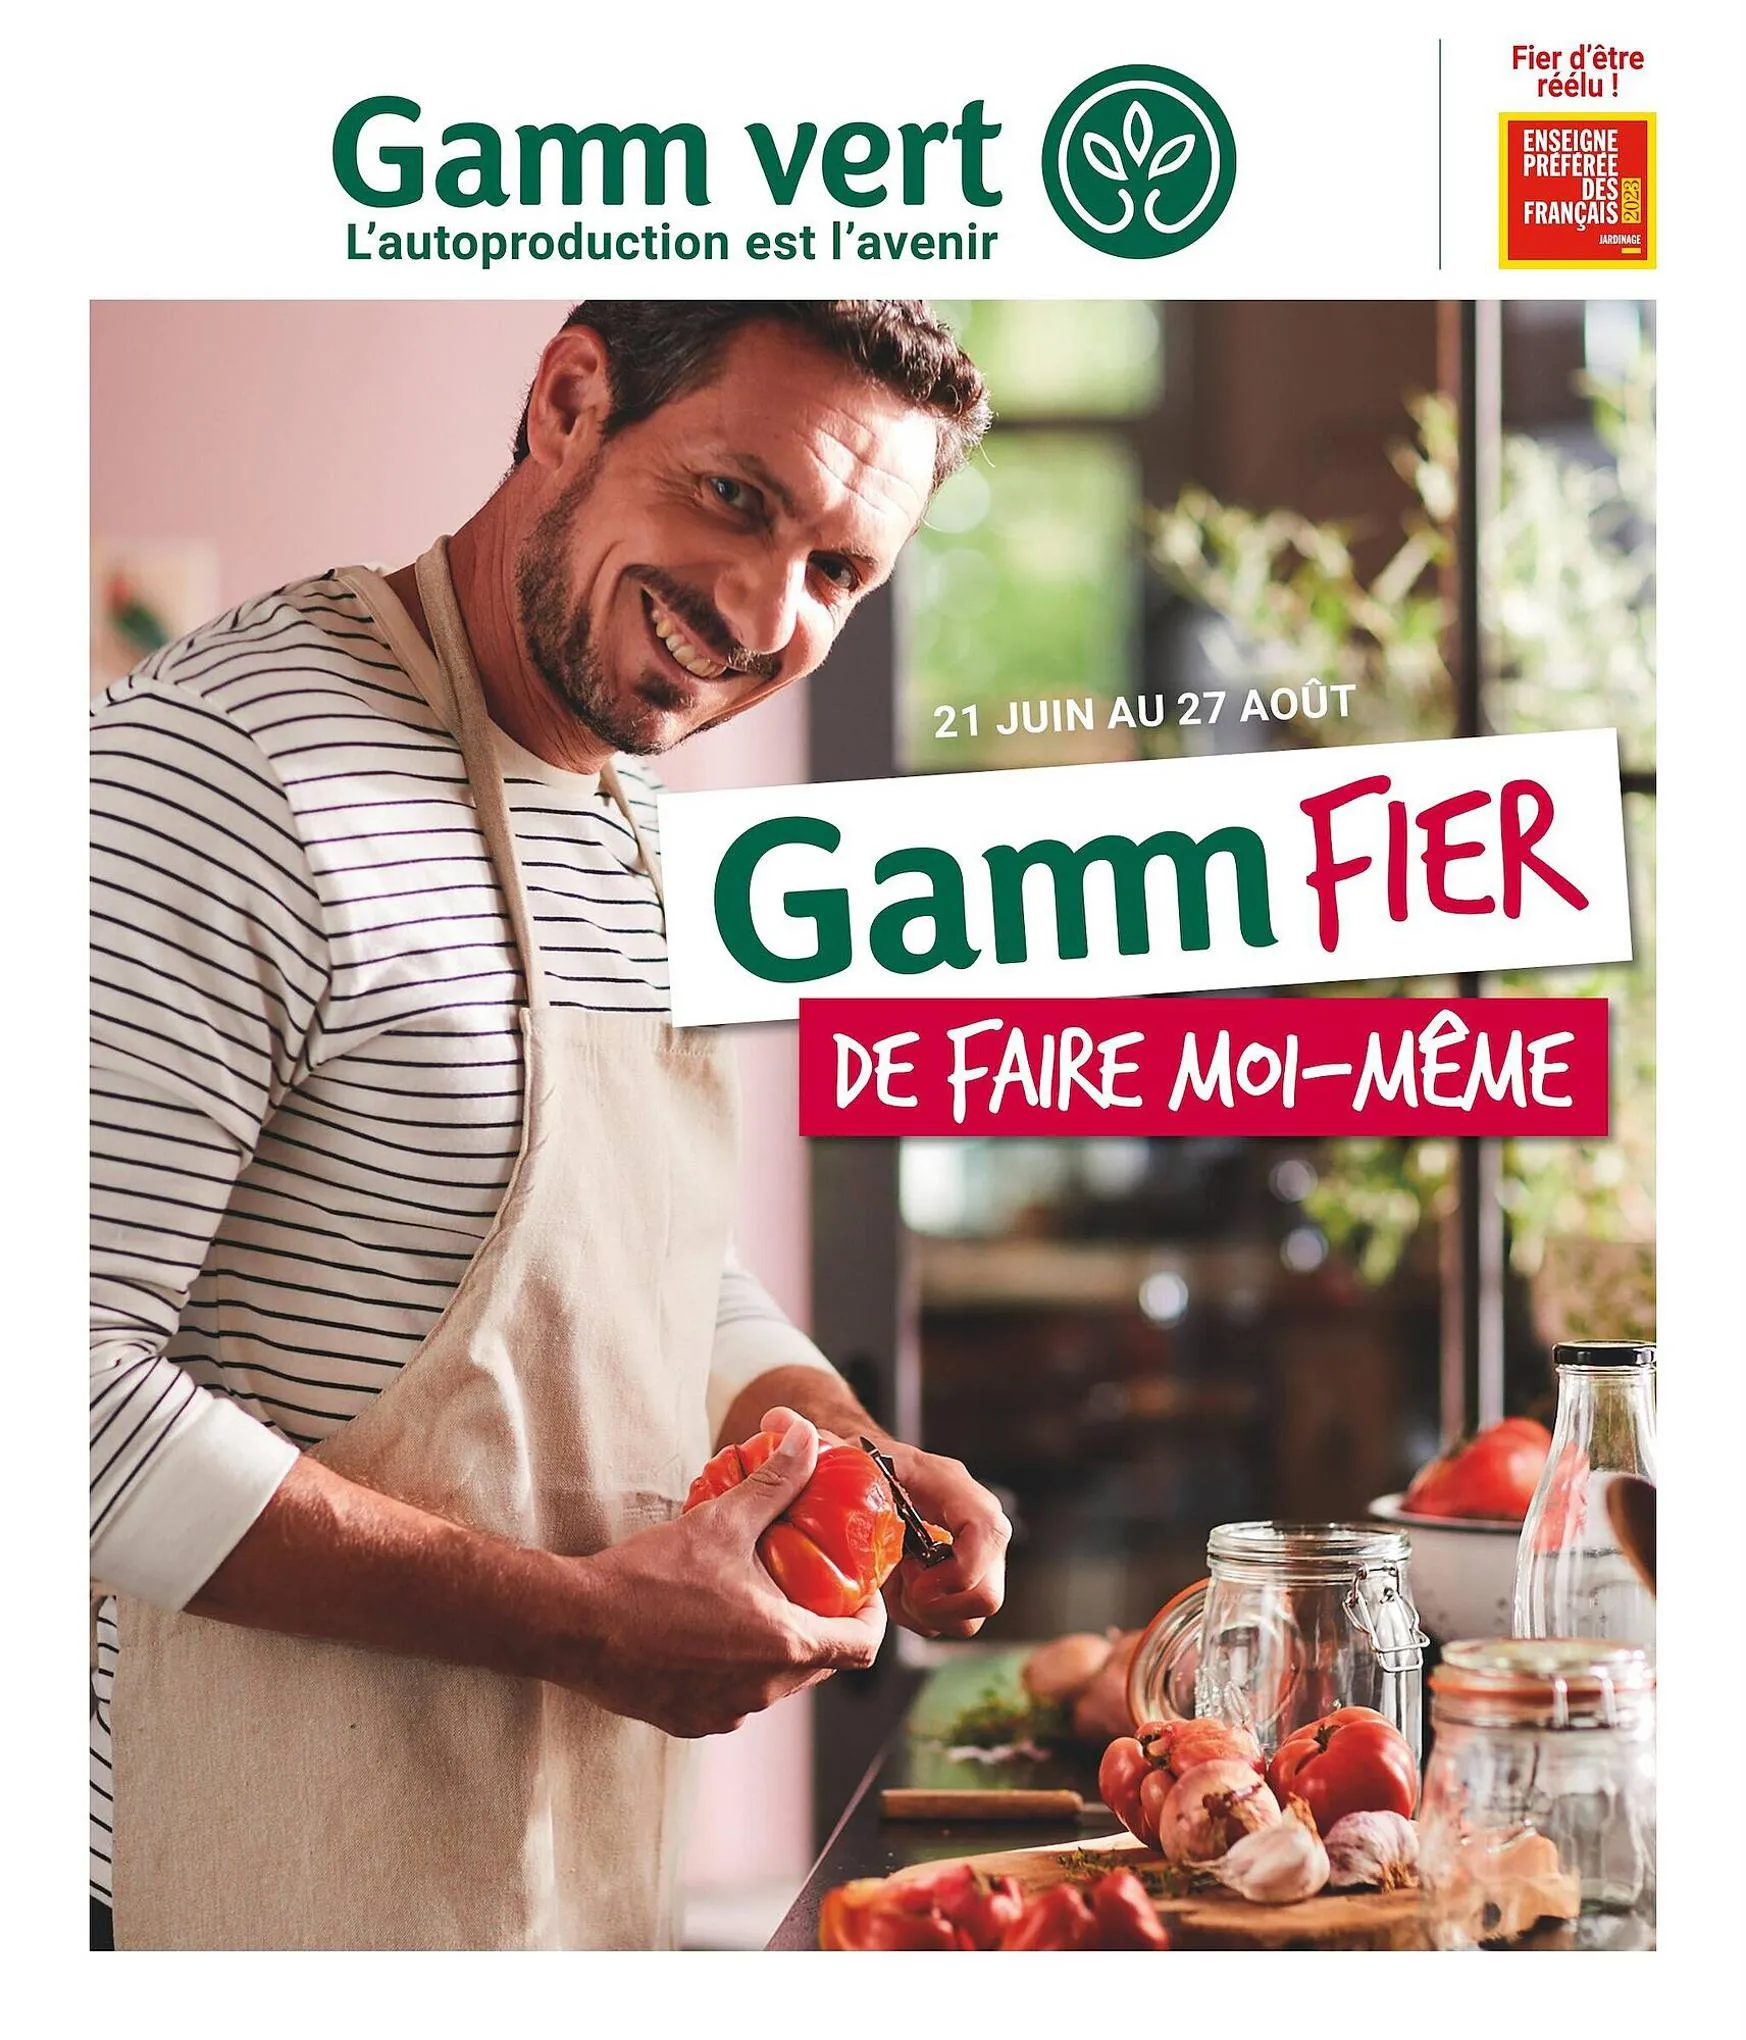 Catalogue Catalogue Gamm vert, page 00001